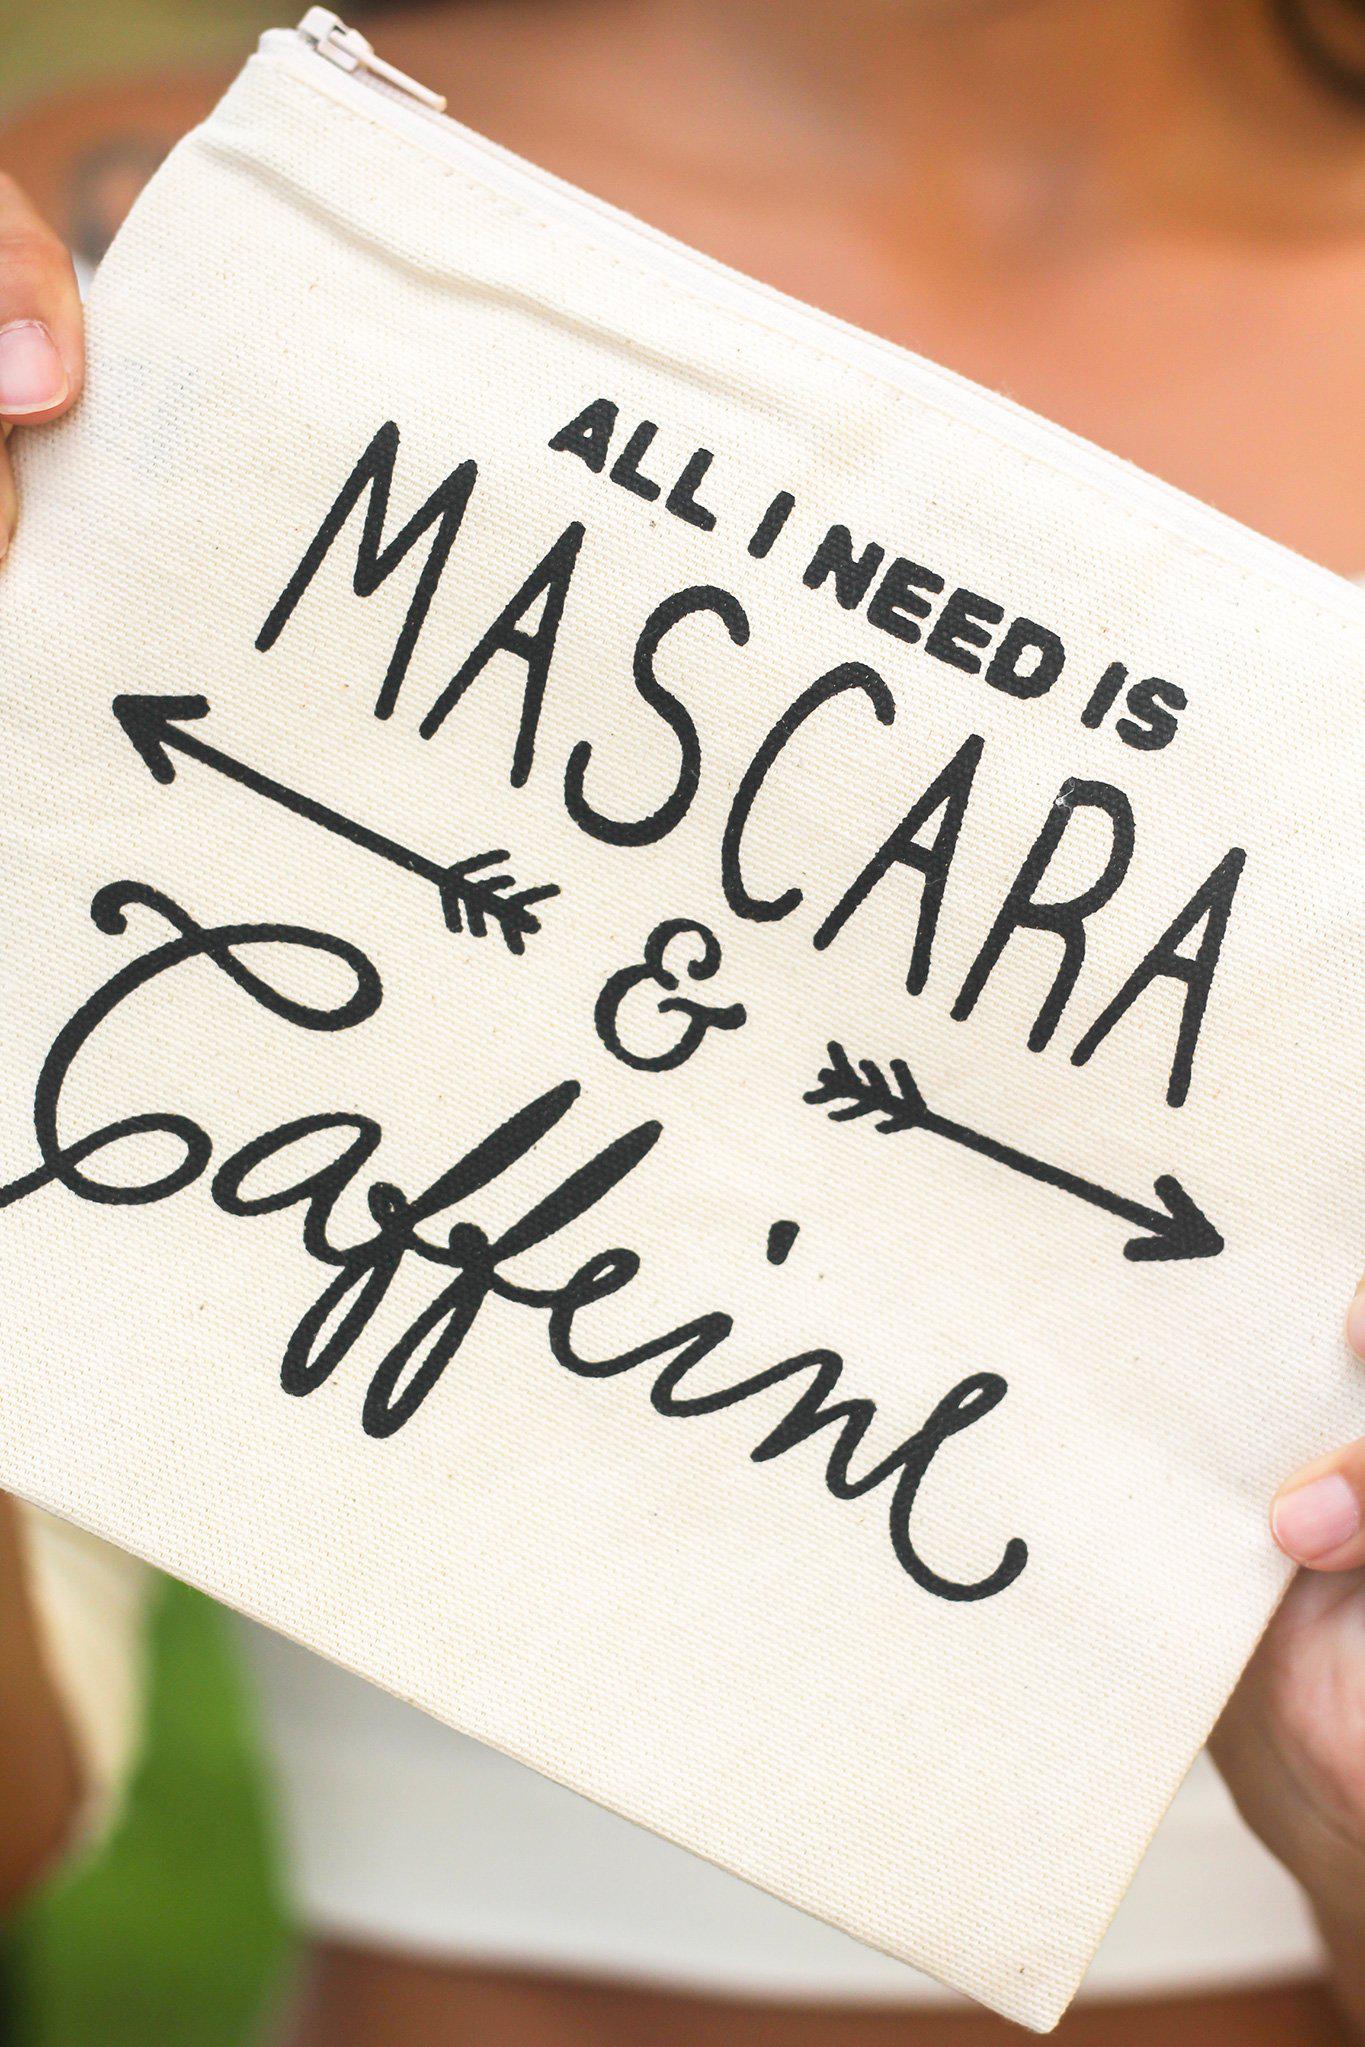 White "All I Need is Mascara & Caffeine" Makeup Bag